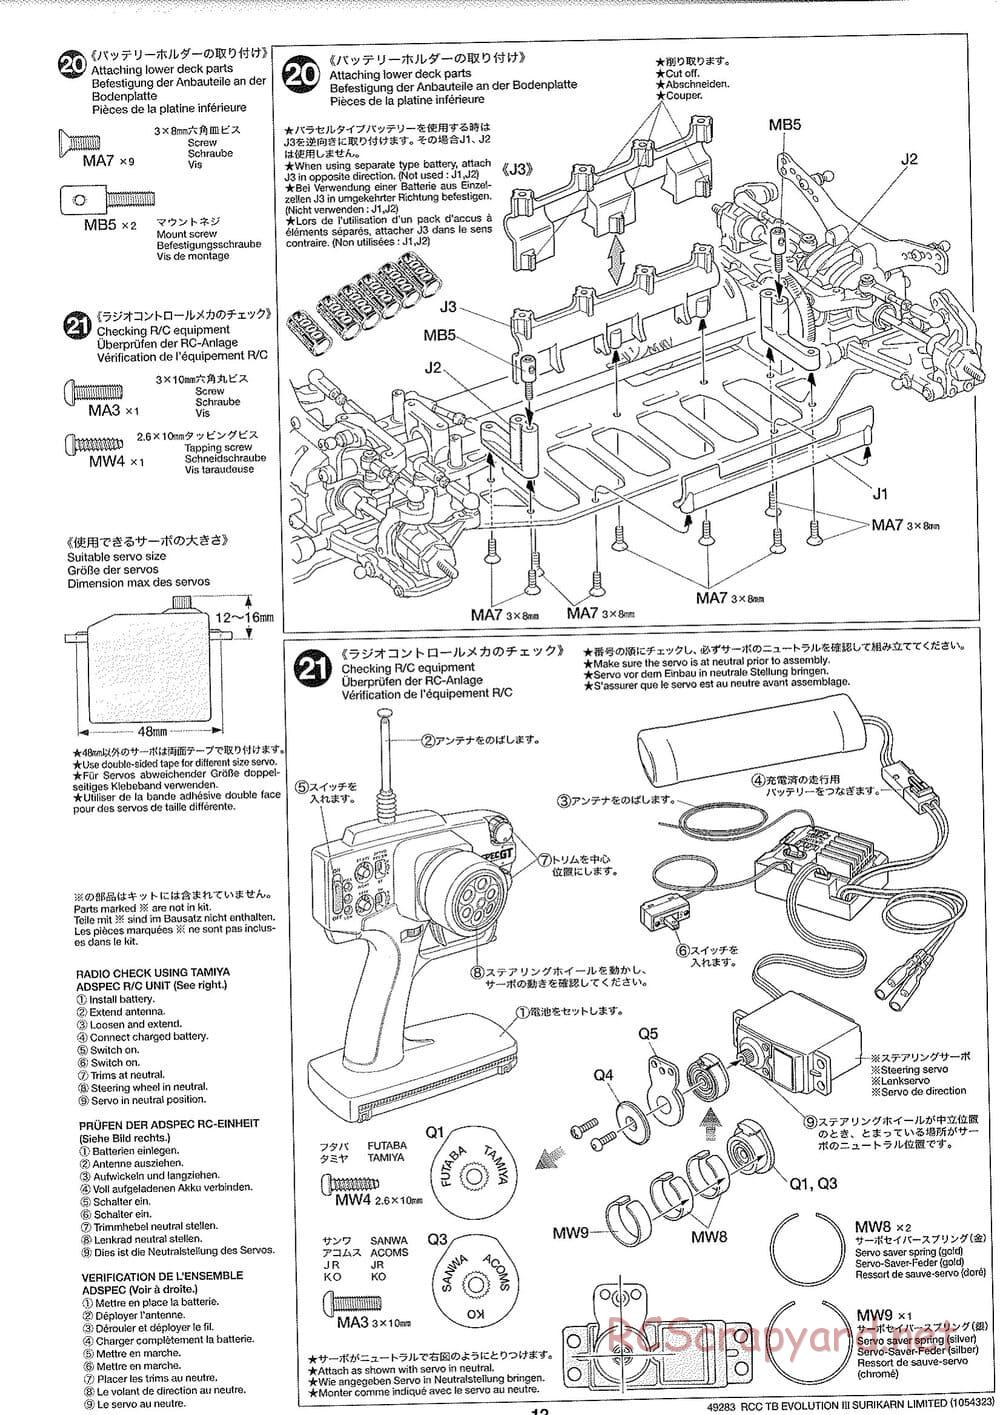 Tamiya - TB Evolution III Surikarn Limited Chassis - Manual - Page 12